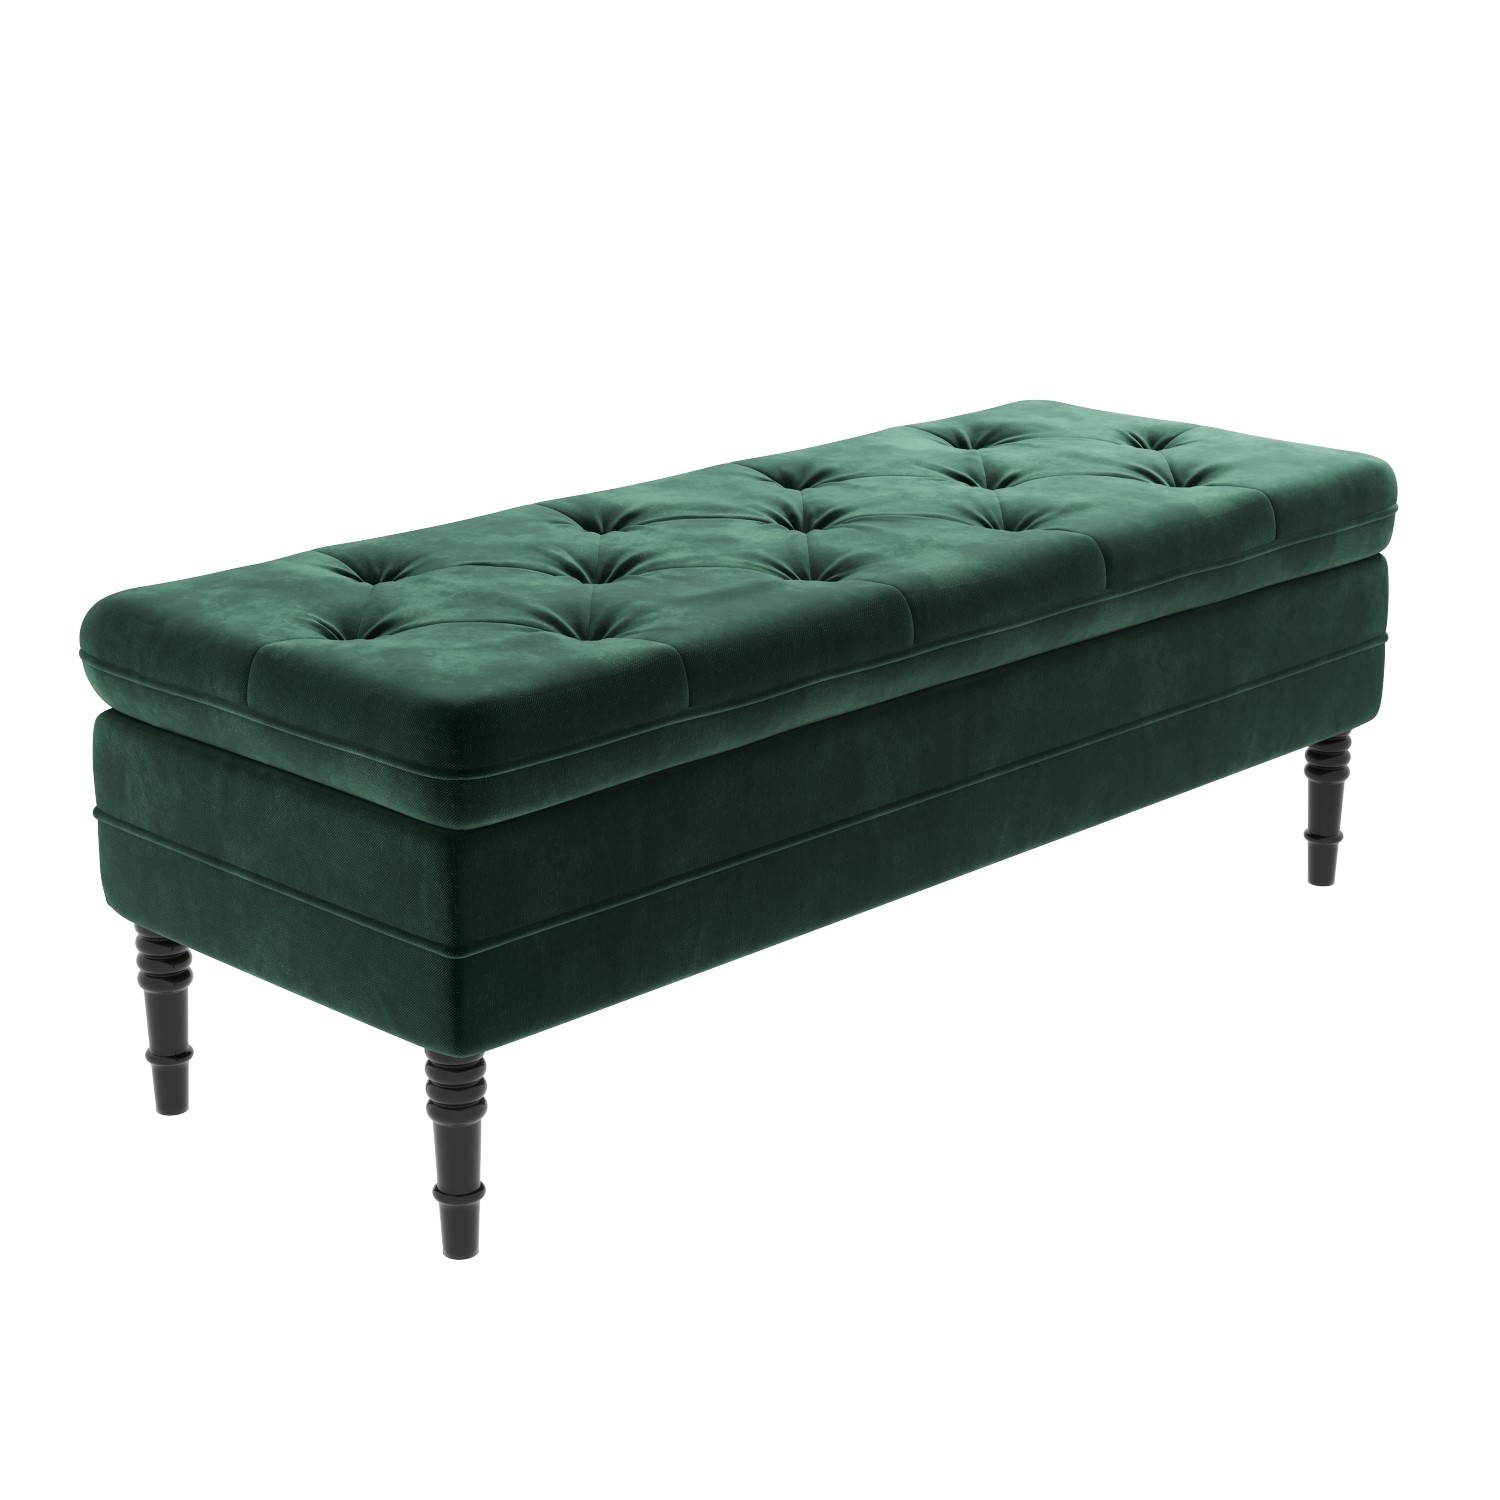 Safina Ottoman Storage Bench In Bottle Green Velvet With Button Detail Furniture123